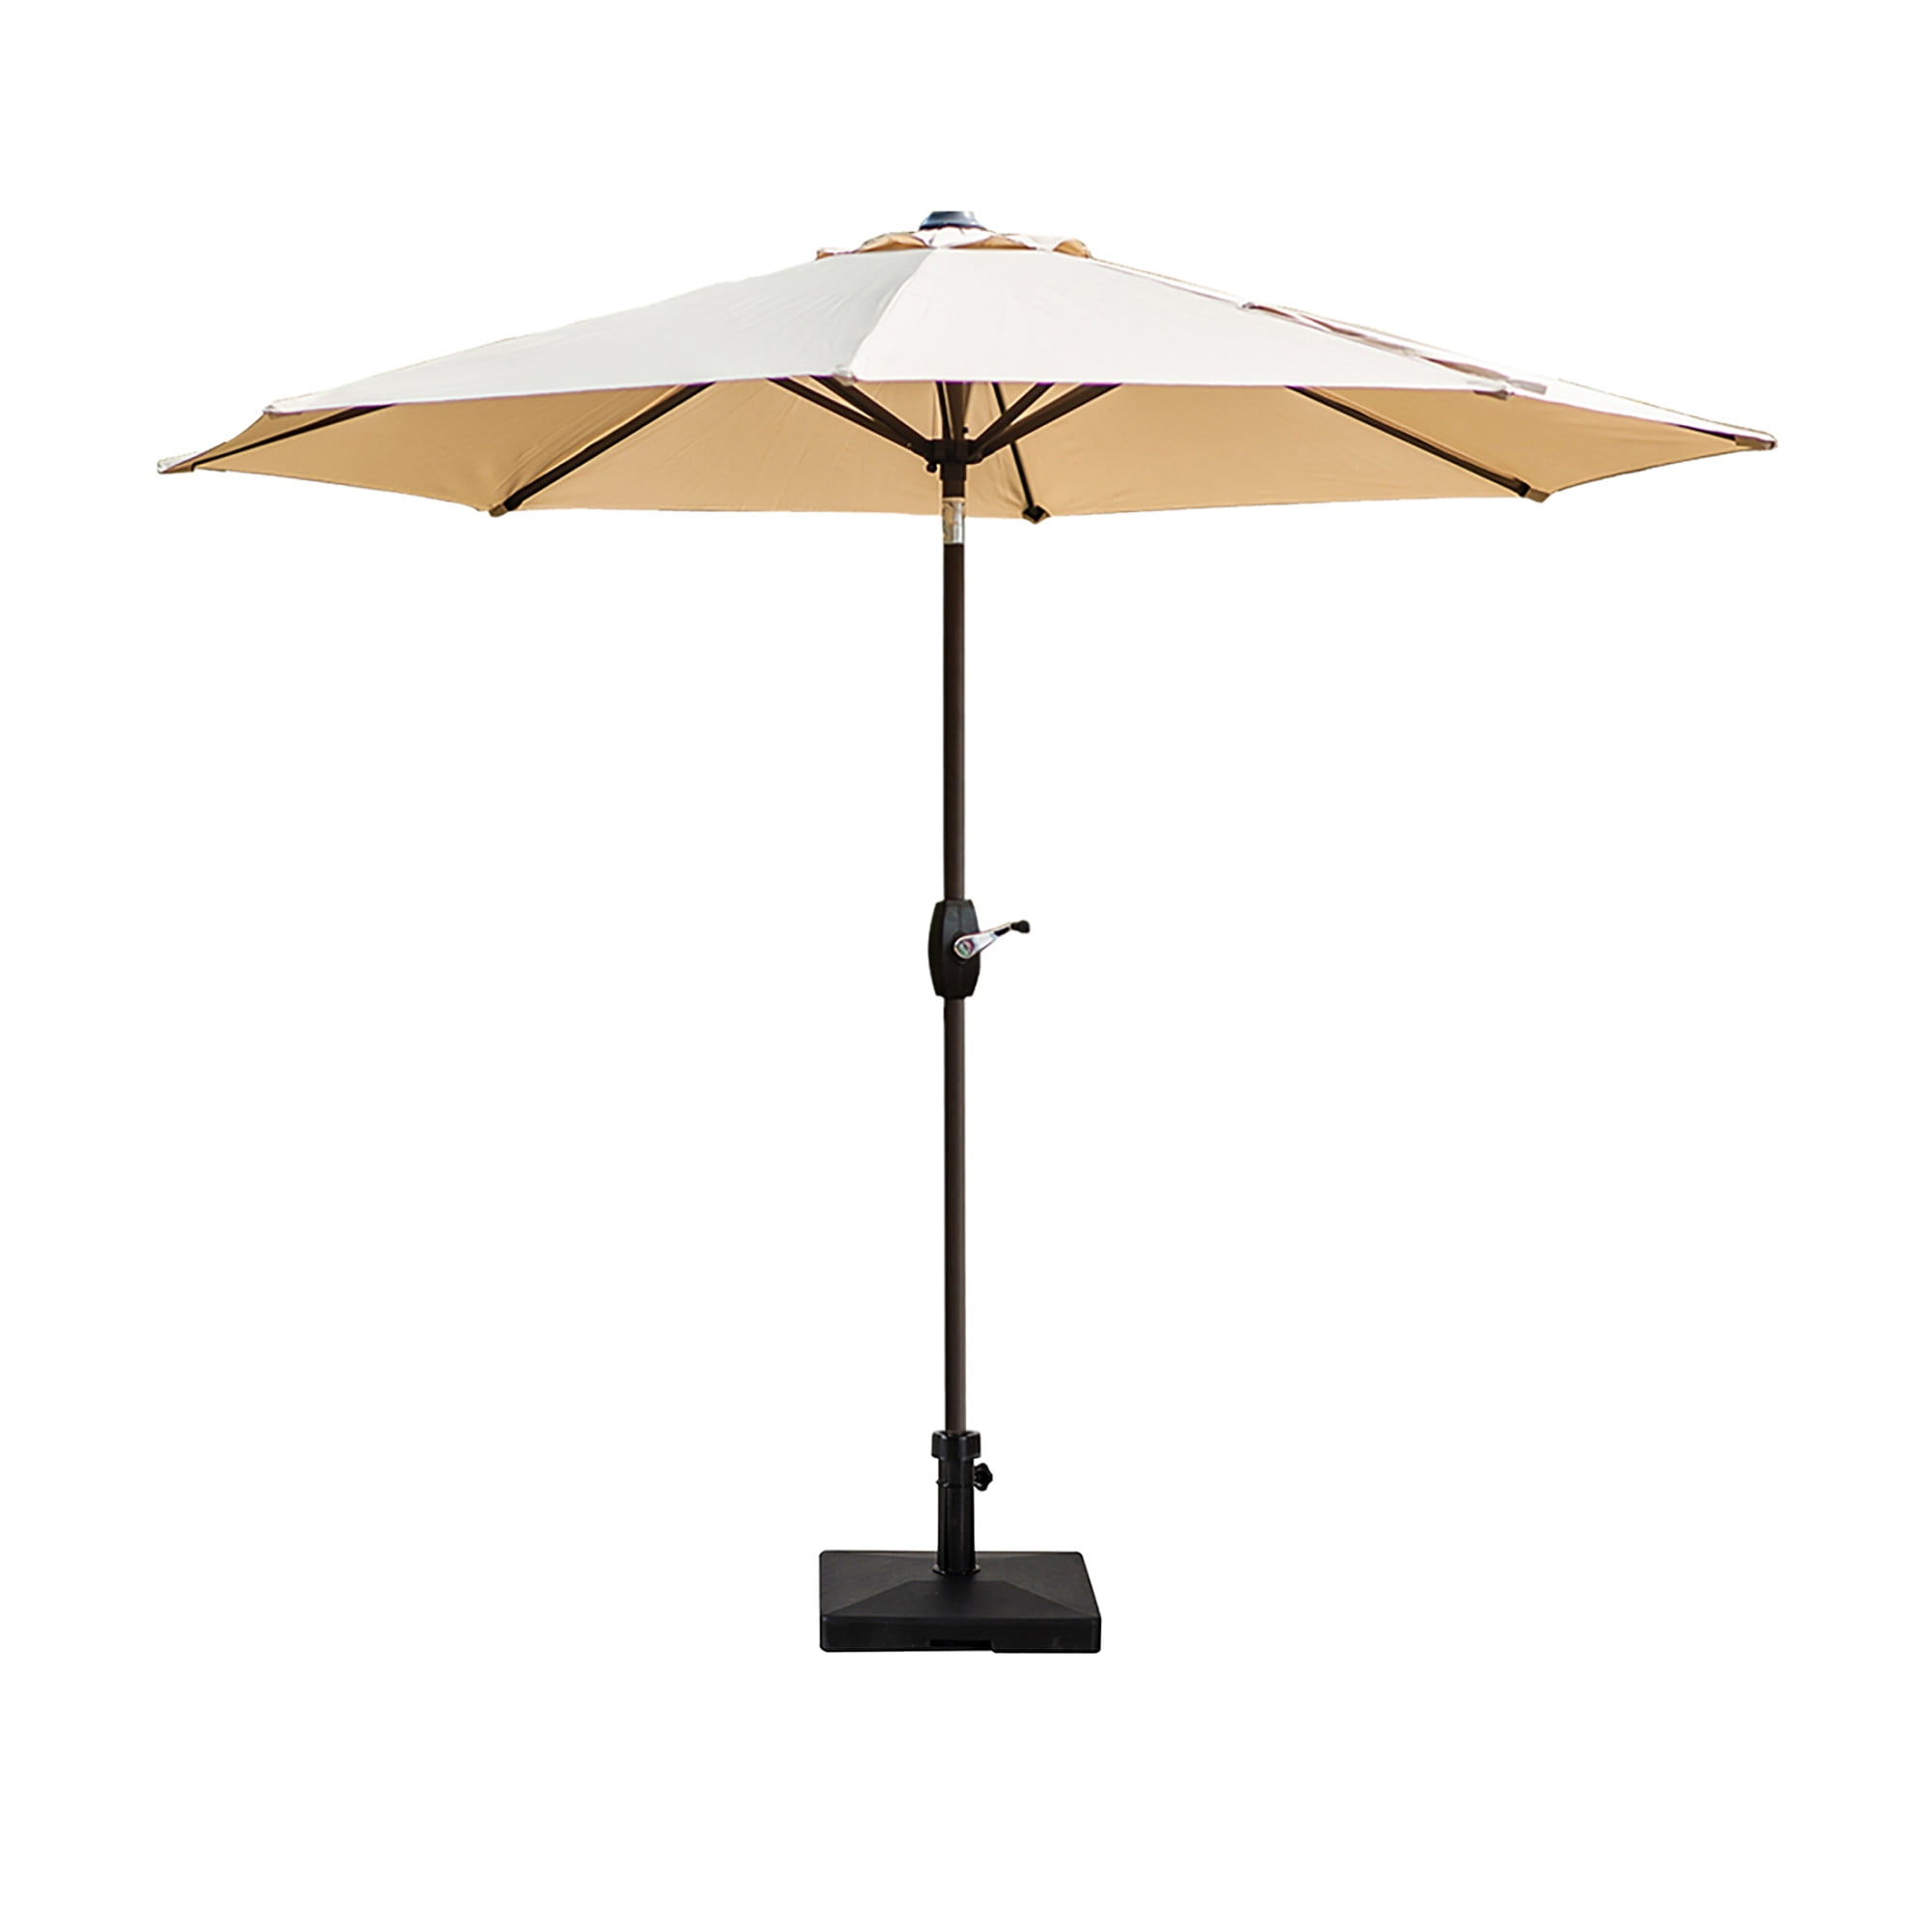 Details about   DOIFUN 9ft Patio Umbrella Aluminum Outdoor Umbrella Market Table Umbrellas with 